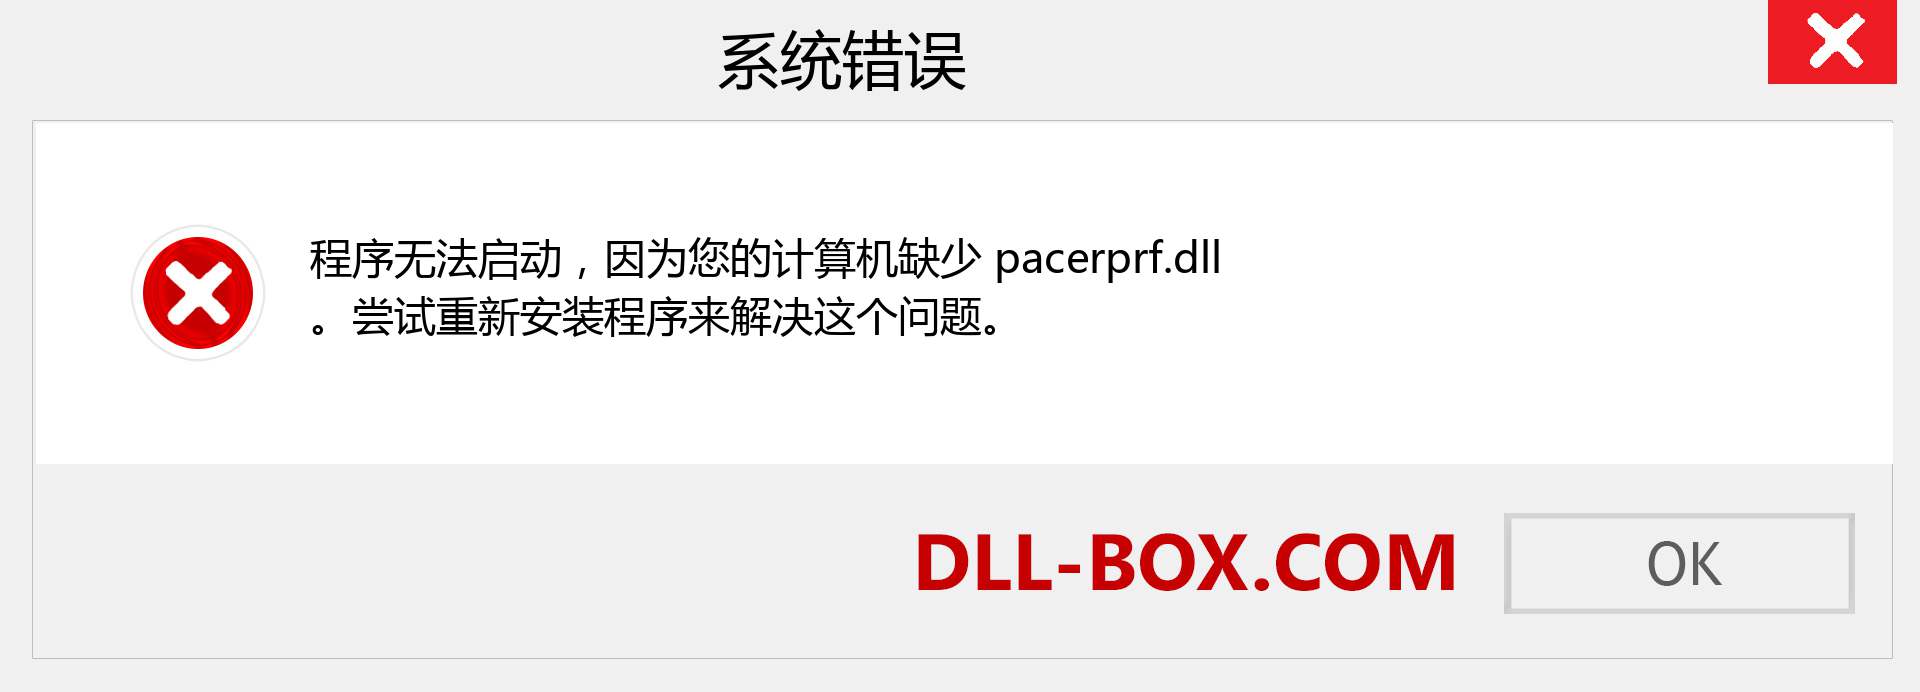 pacerprf.dll 文件丢失？。 适用于 Windows 7、8、10 的下载 - 修复 Windows、照片、图像上的 pacerprf dll 丢失错误